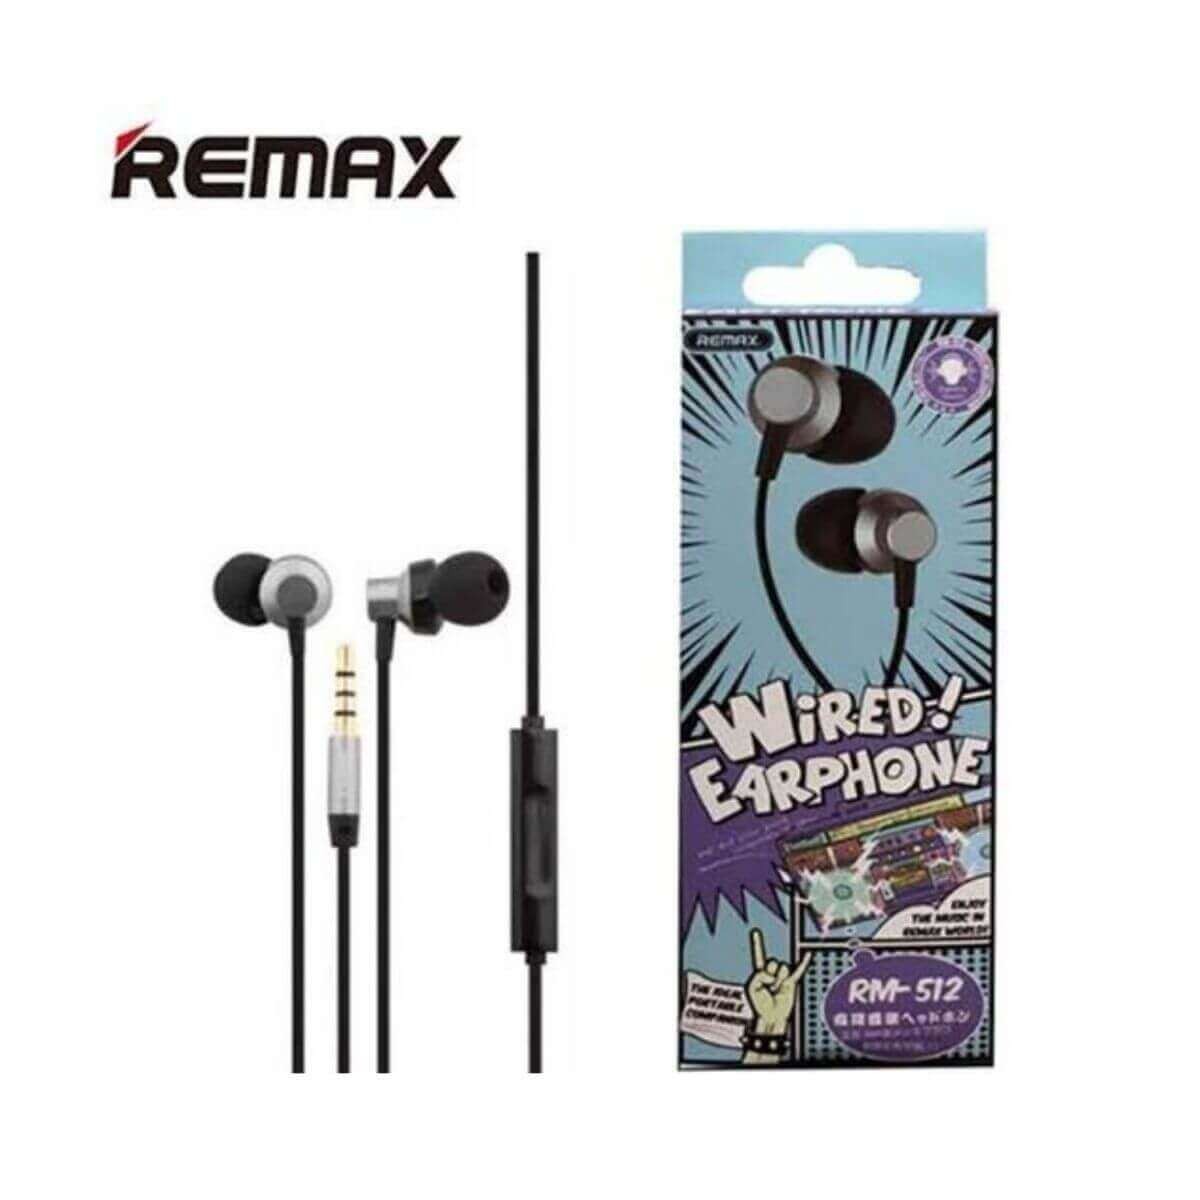 Remax RM512 Metal Earphone Black & Red Bd